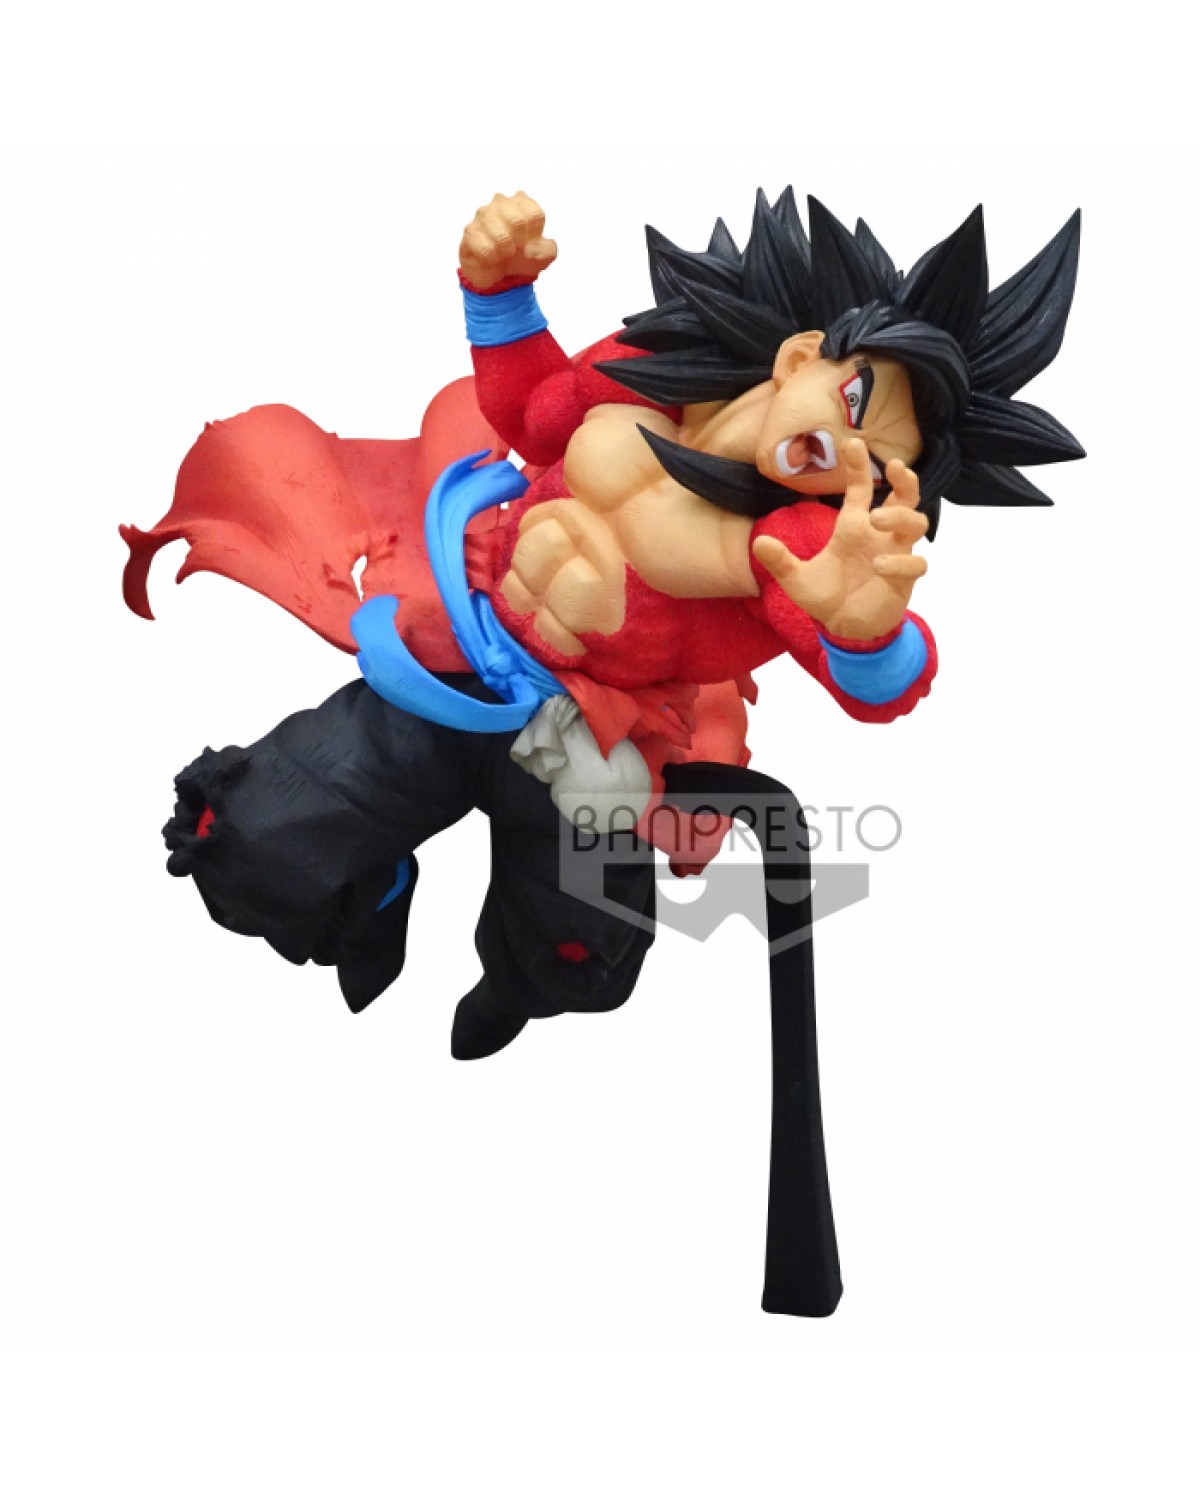 FIGURE DRAGON BALL HEROES - GOKU SUPER SAYAJIN 4 XENO - 9TH ANNIVERSARY FIGURE REF: 20241/20242